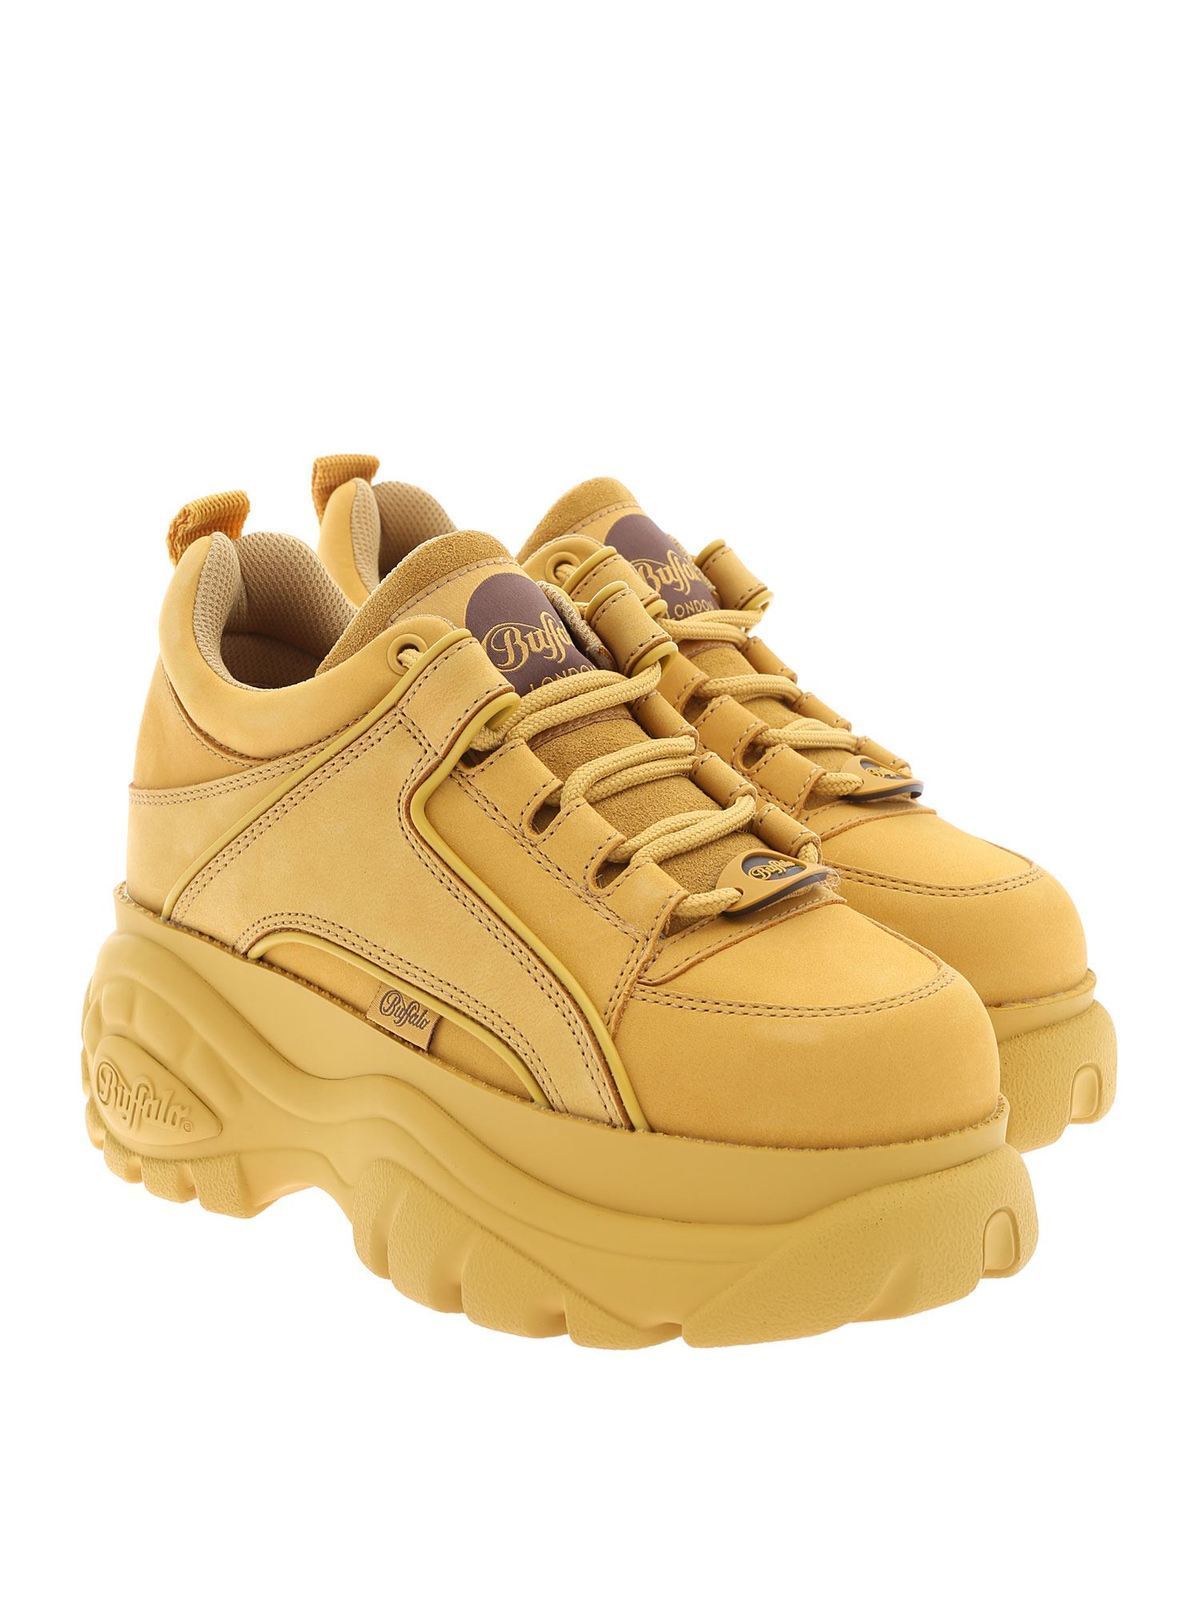 Trainers London - Classic sneakers in ocher yellow - 13391420BEIGE